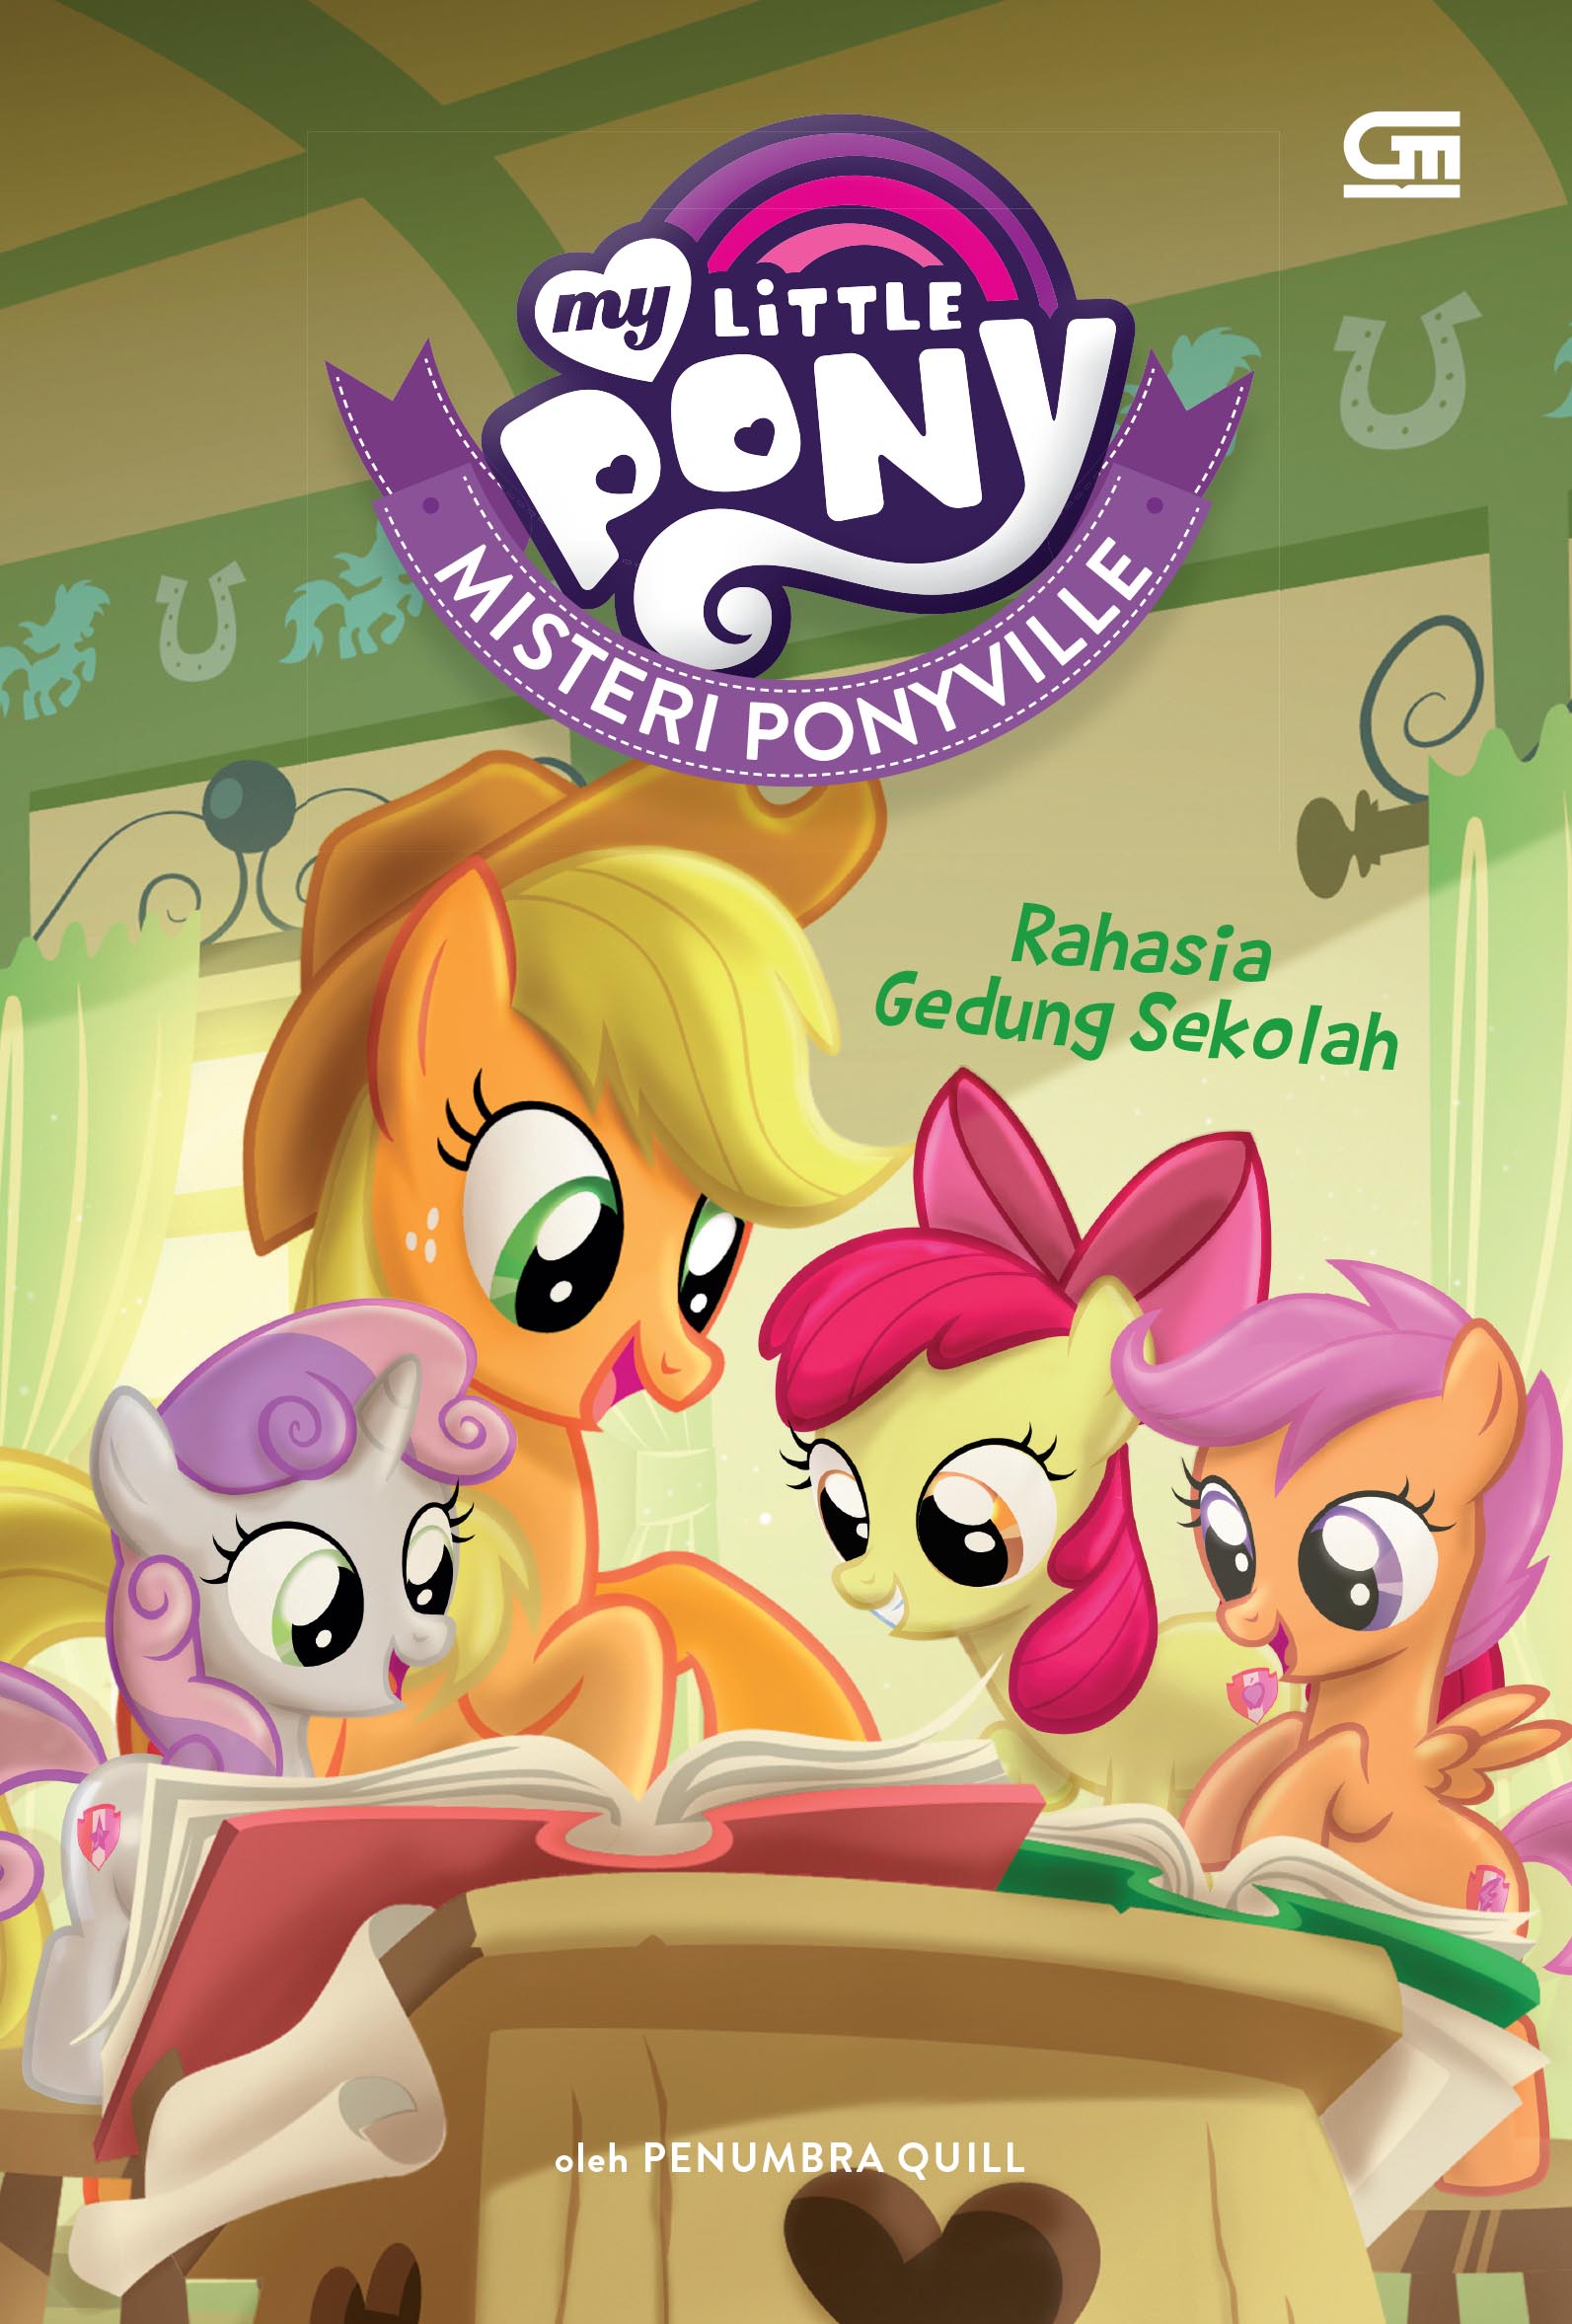 My Little Pony Misteri Ponyville: Rahasia Gedung Sekolah